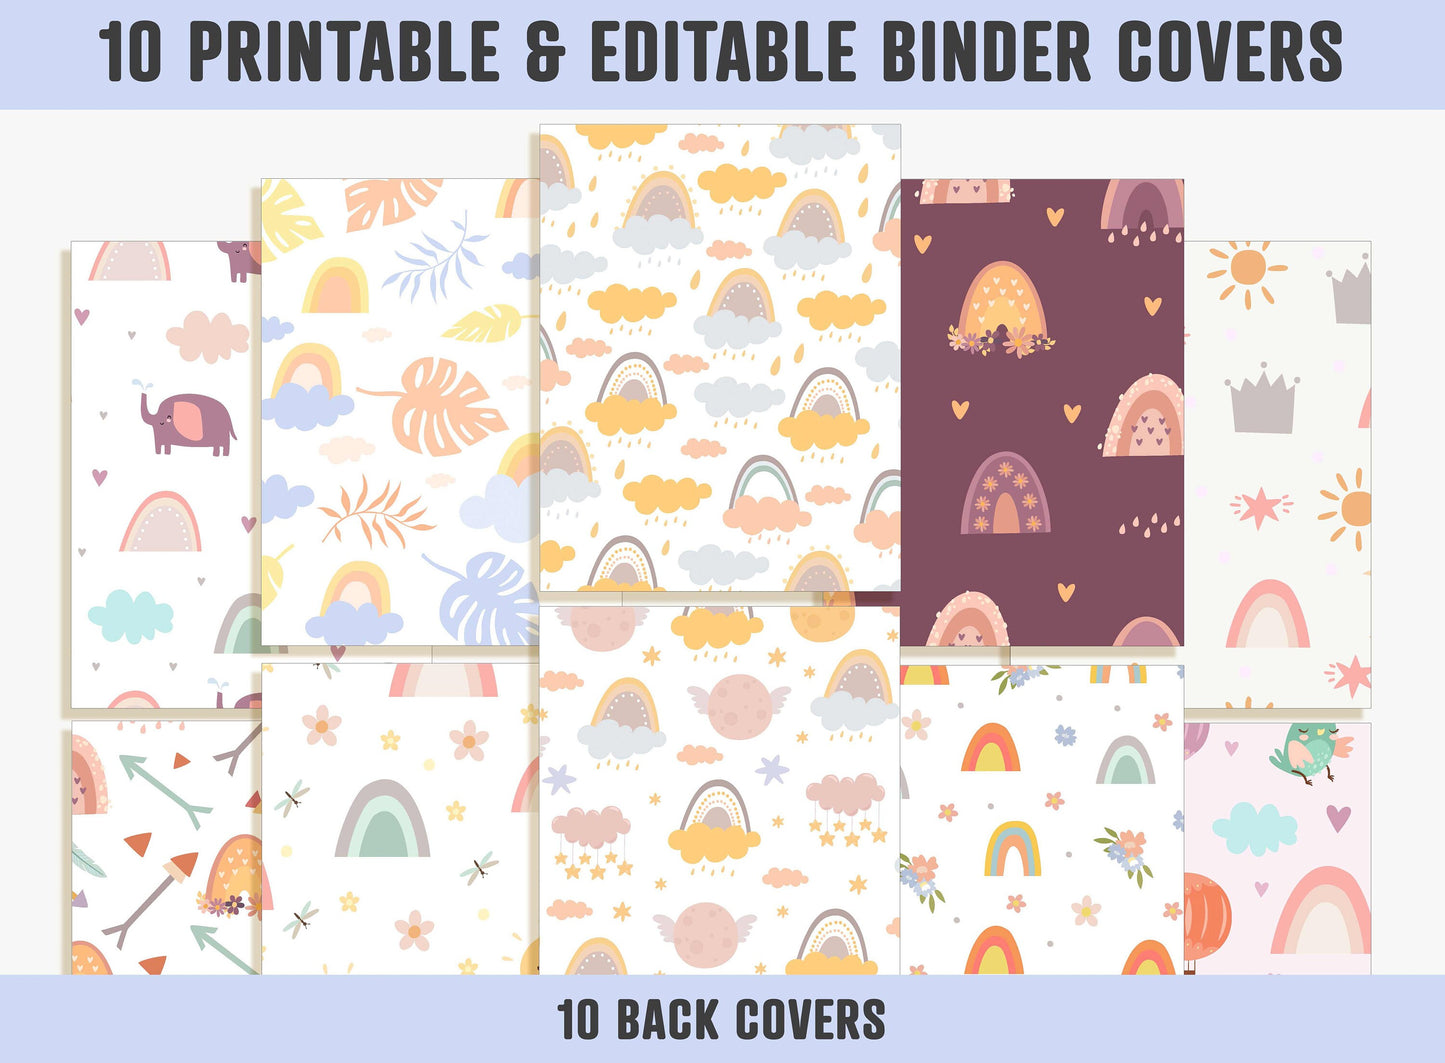 Rainbow Binder Cover Printable Editable, 10 Covers+Spines, Binder Insert, Planner Cover, Teacher/School Binder Cover, Printable Binder Cover